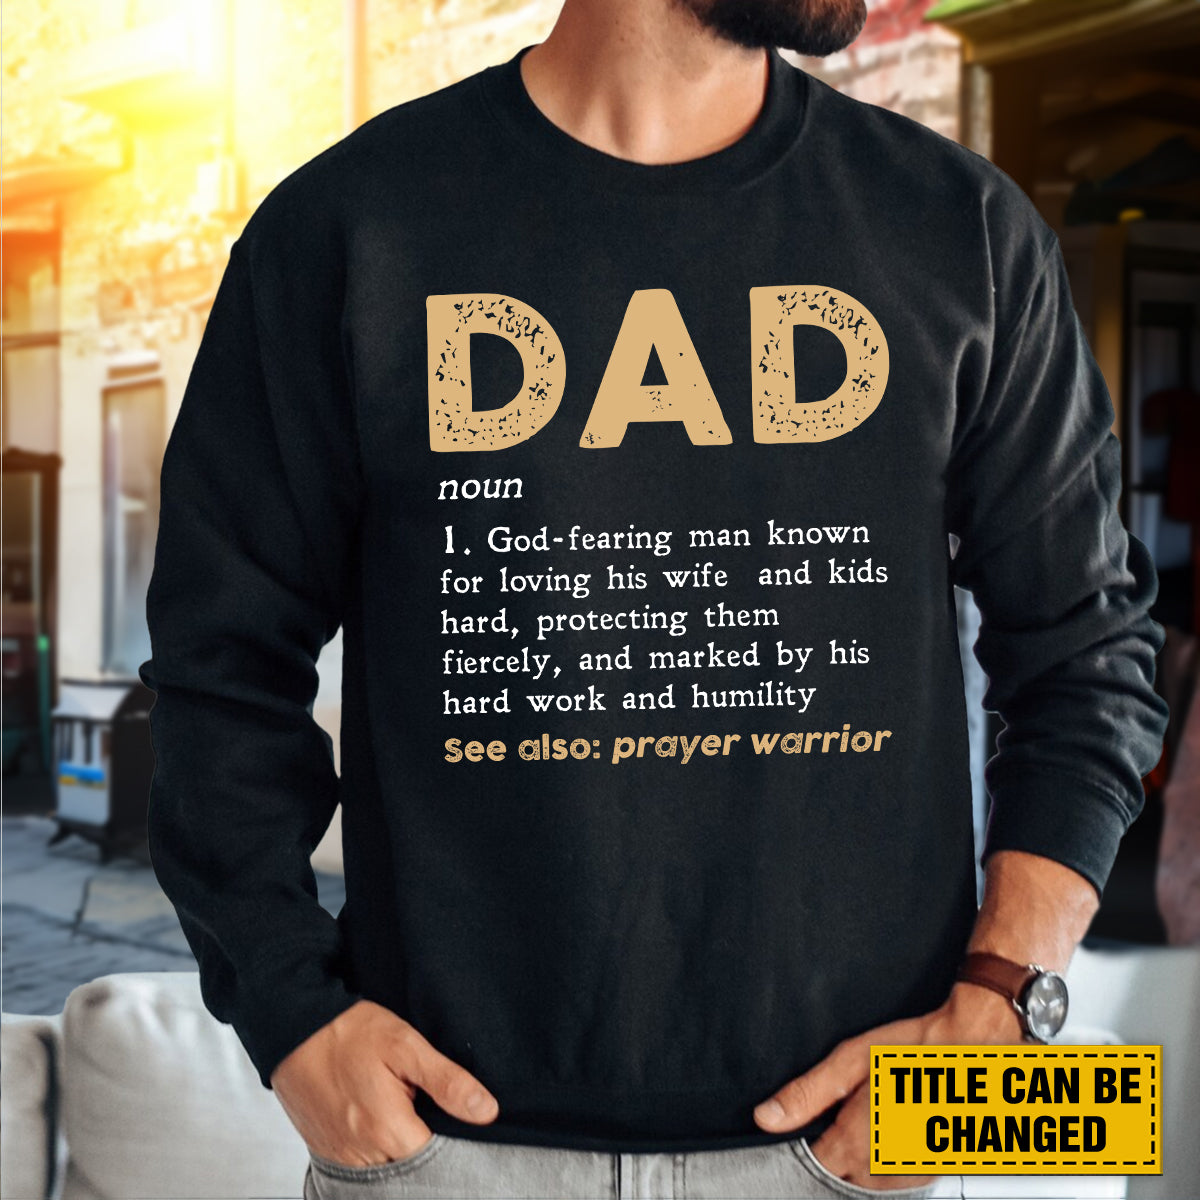 Teesdily | Dad Definition Customized Shirt, Prayer Warrior Men's Shirt, Father Day Gifts, God Fearing Man Unisex Tshirt Hoodie Sweatshirt Size S-5XL / Mug 11-15oz